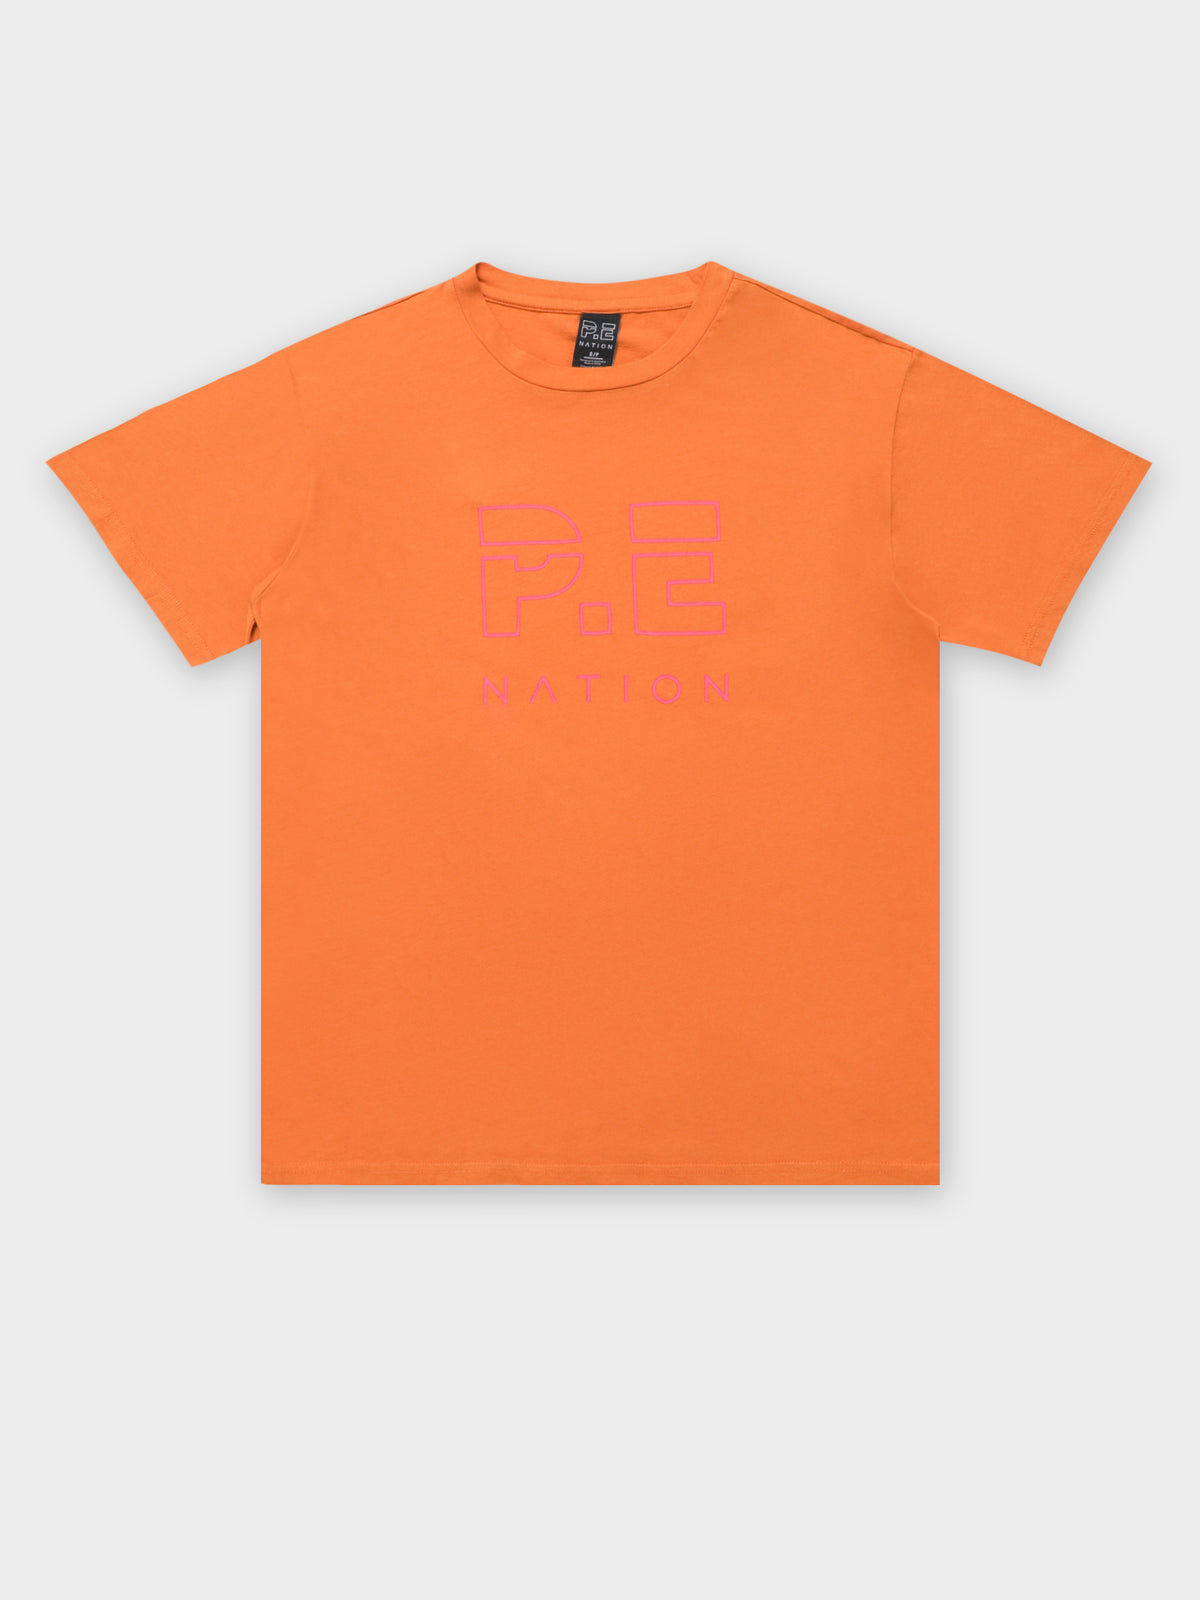 Heads Up T-Shirt in Golden Oak Orange